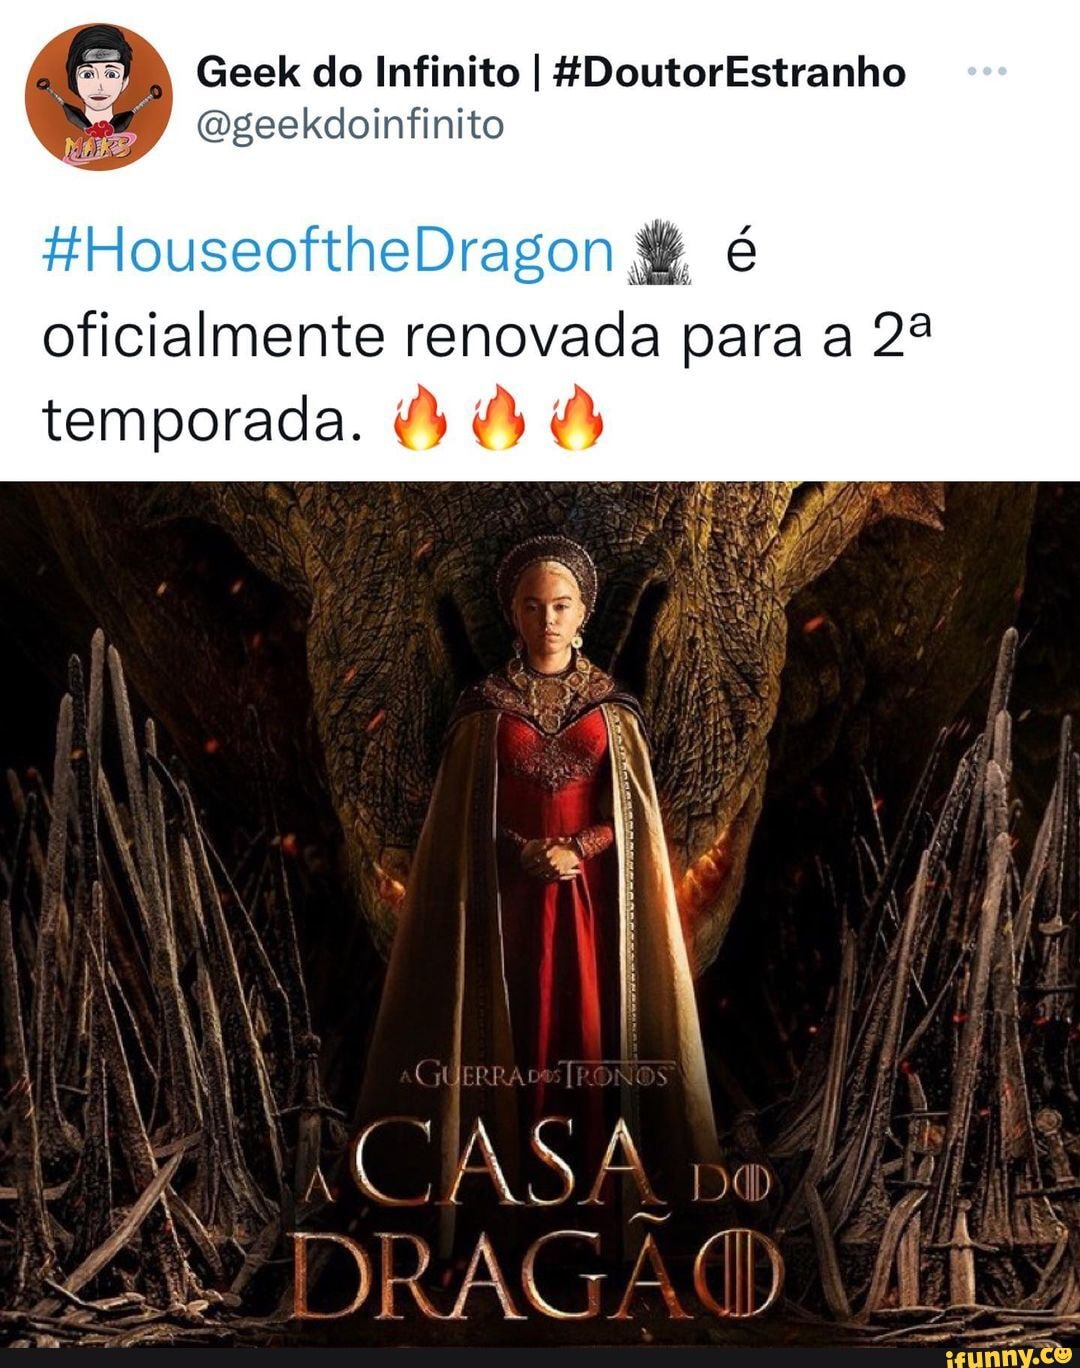 House of the Dragon renovada para 2ª temporada